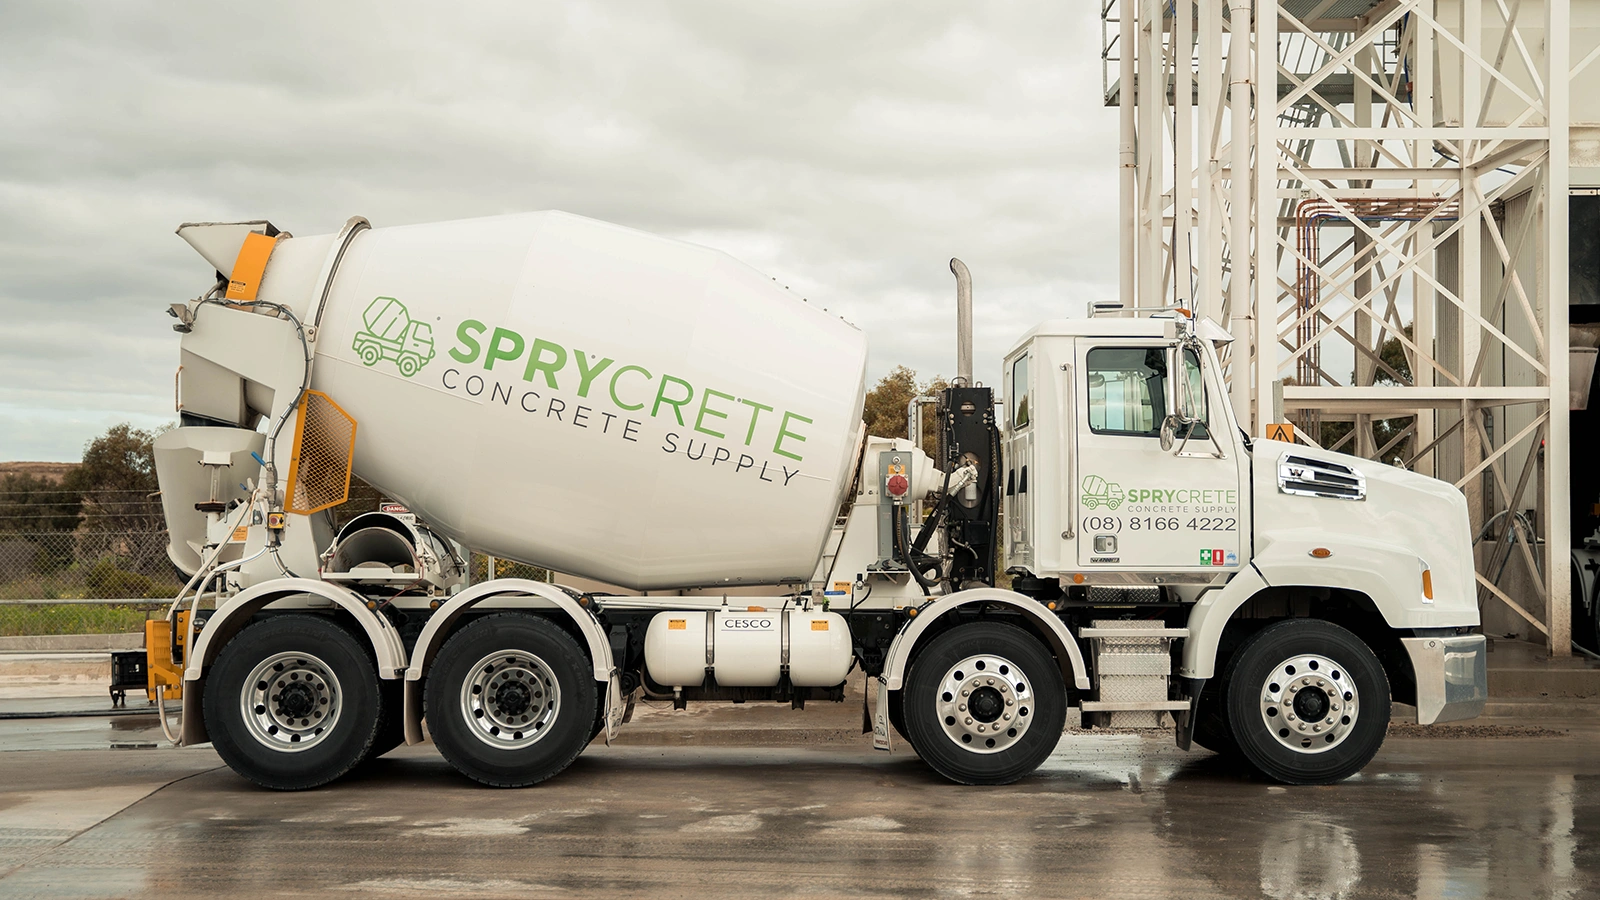 Spry-Truck-Concrete-Mixer